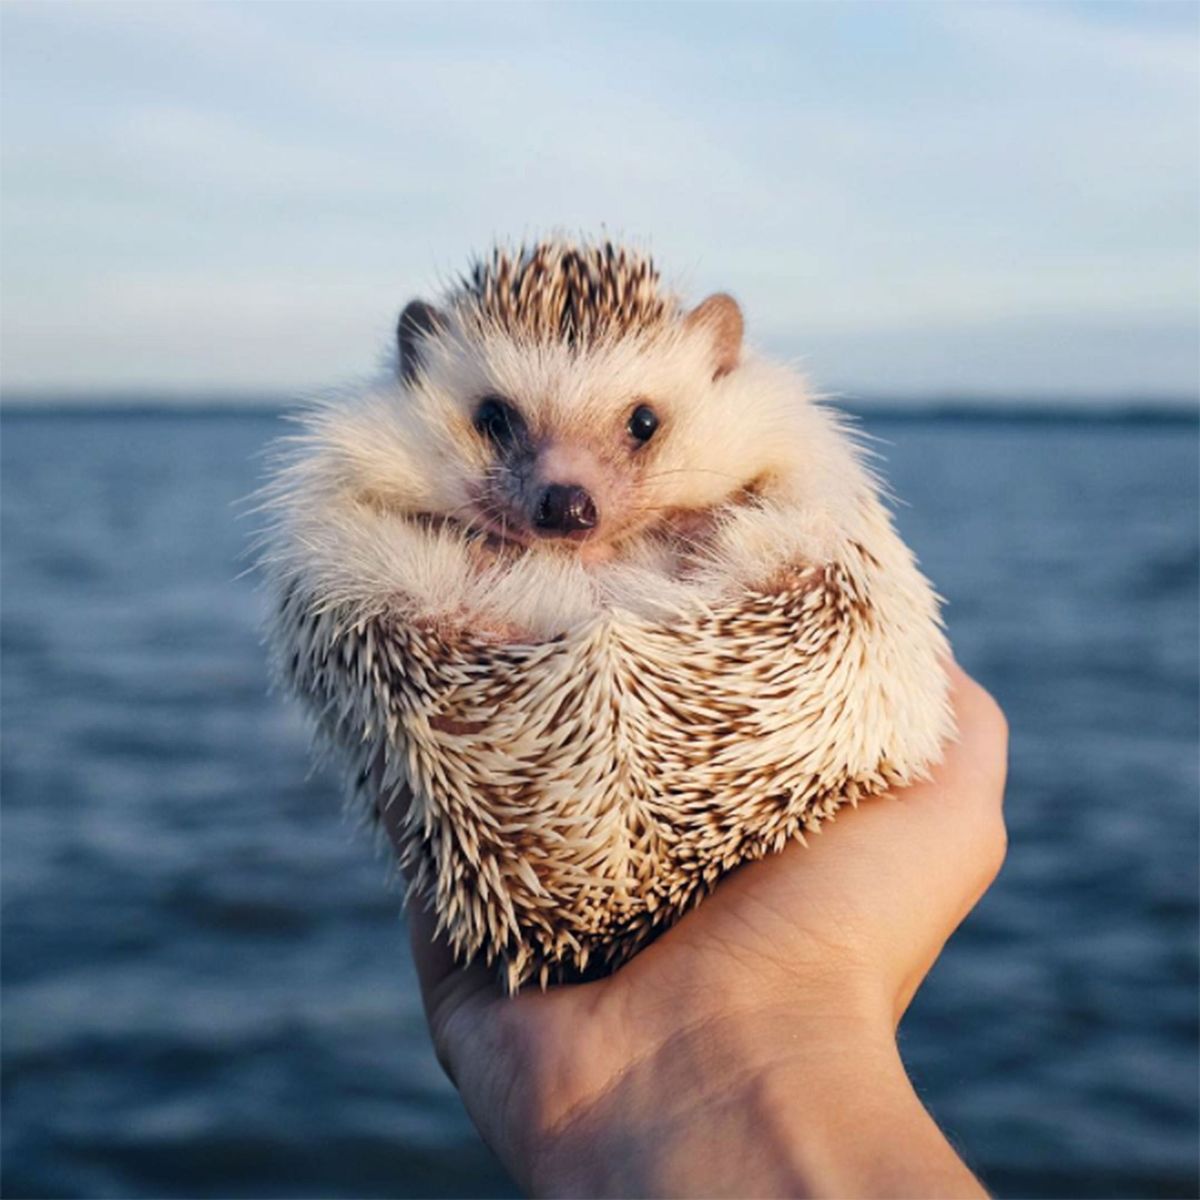 12 Hedgehog  GIFs To Brighten Your Day